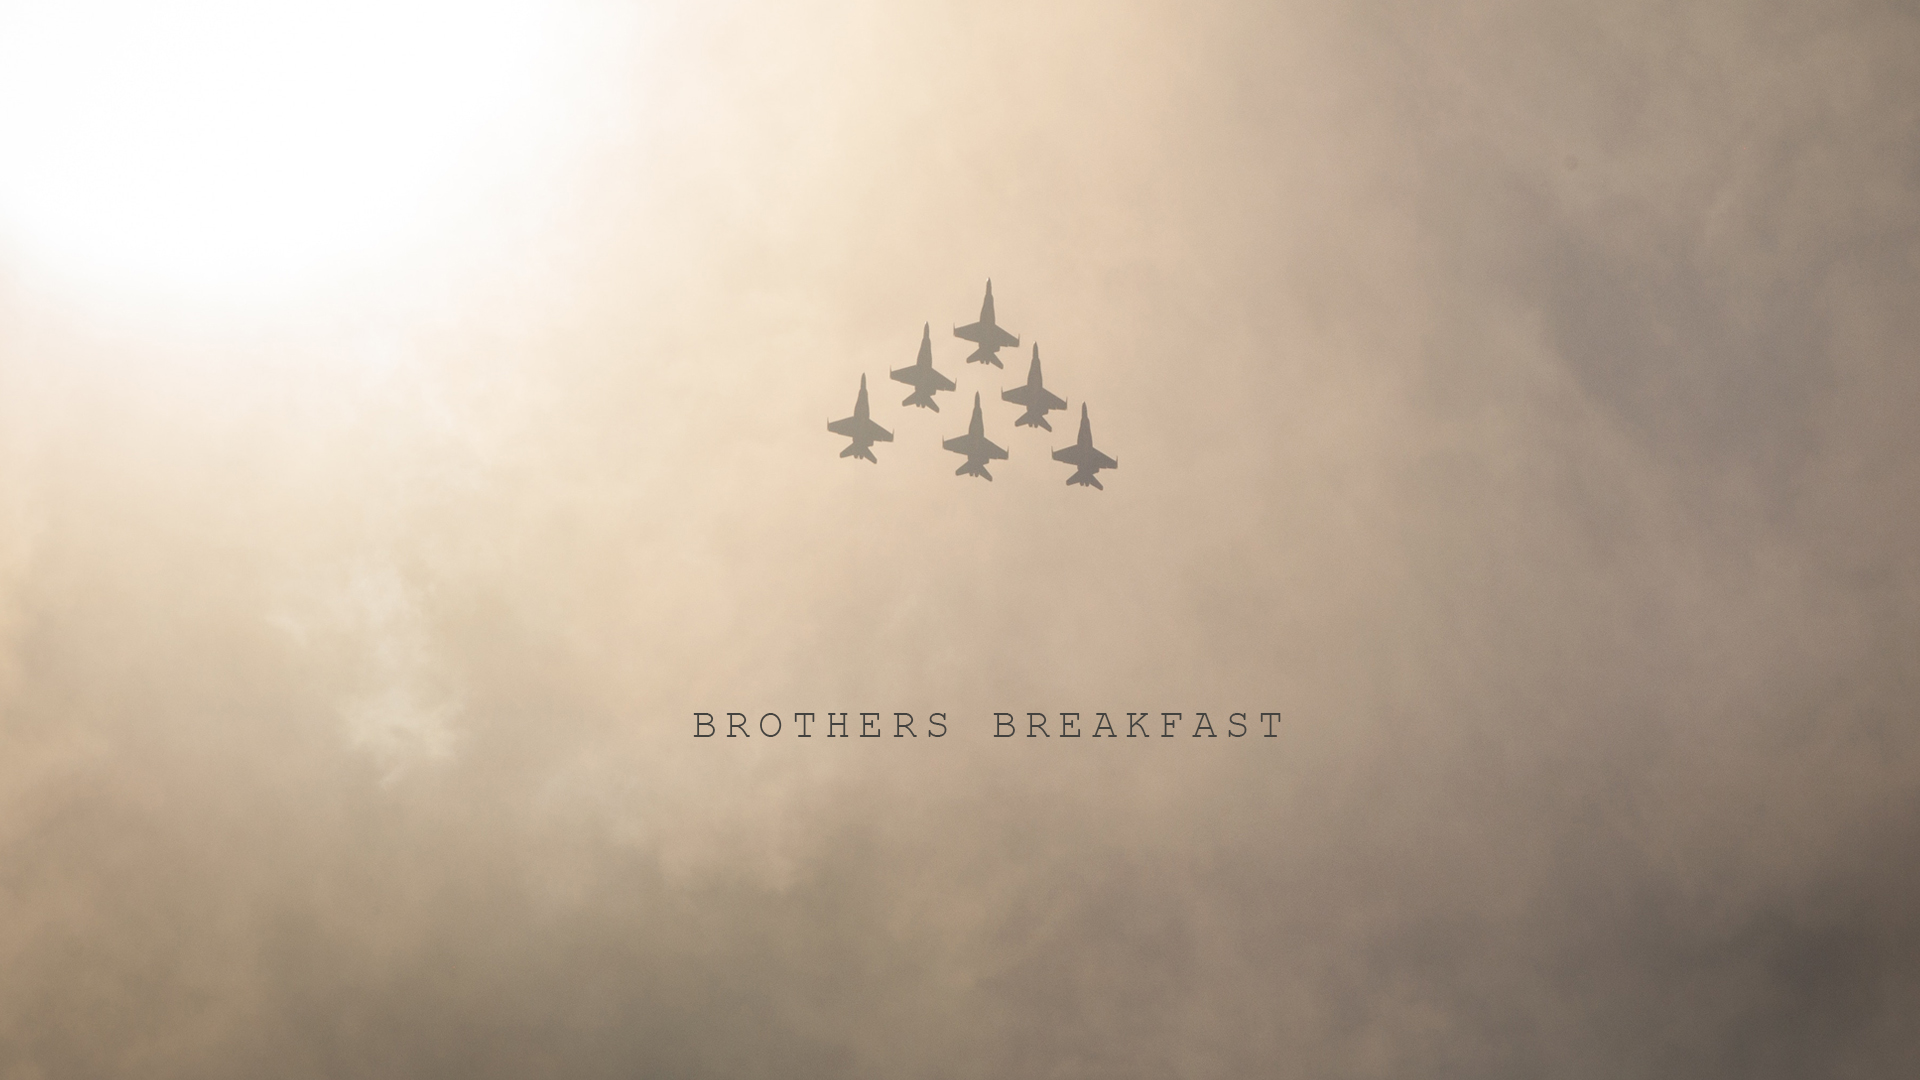 brothers breakfast image